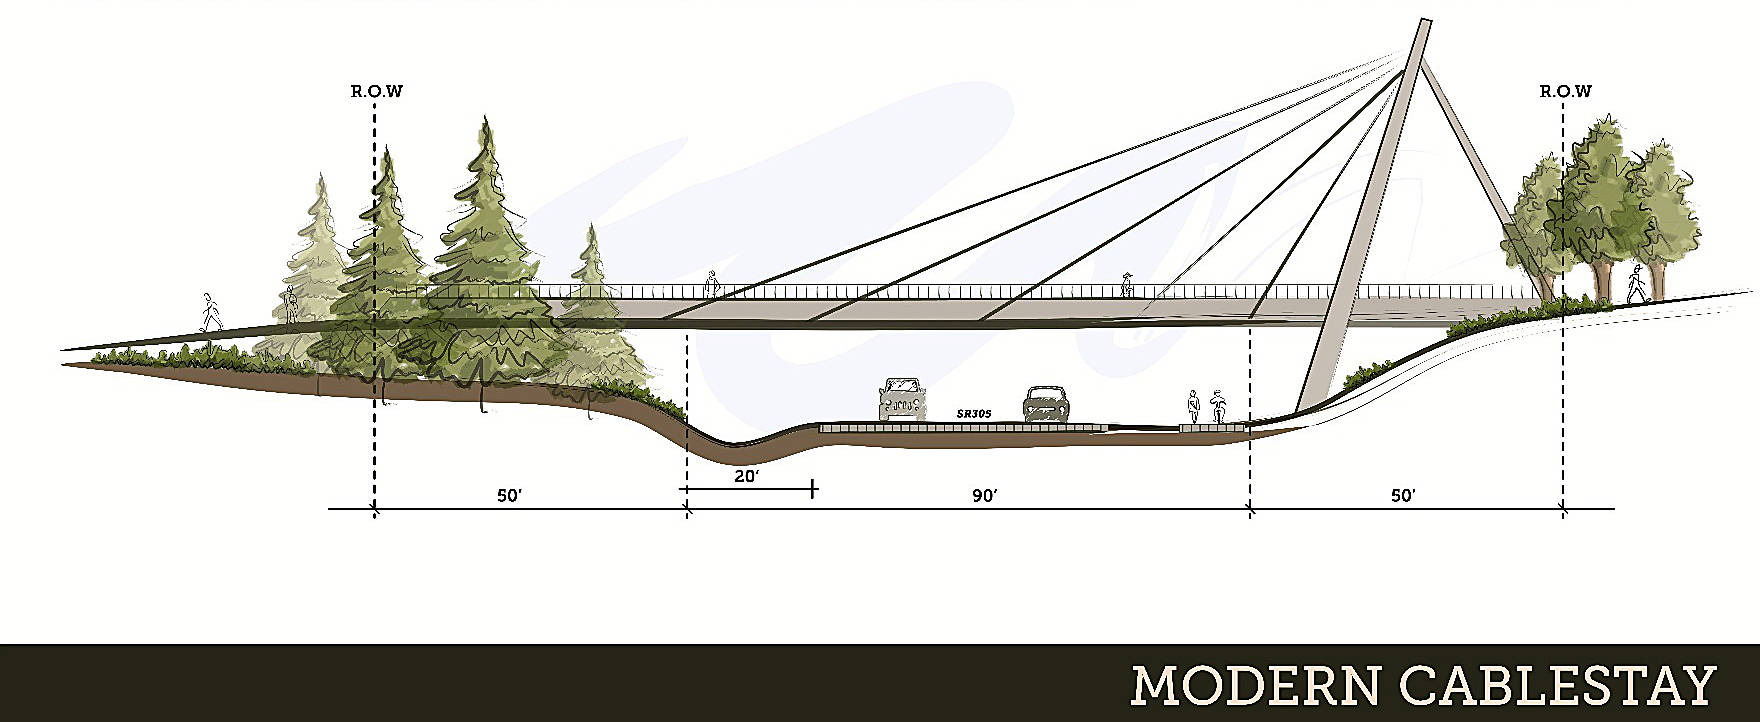 Bainbridge Island presents potential design ideas for 305 bridge